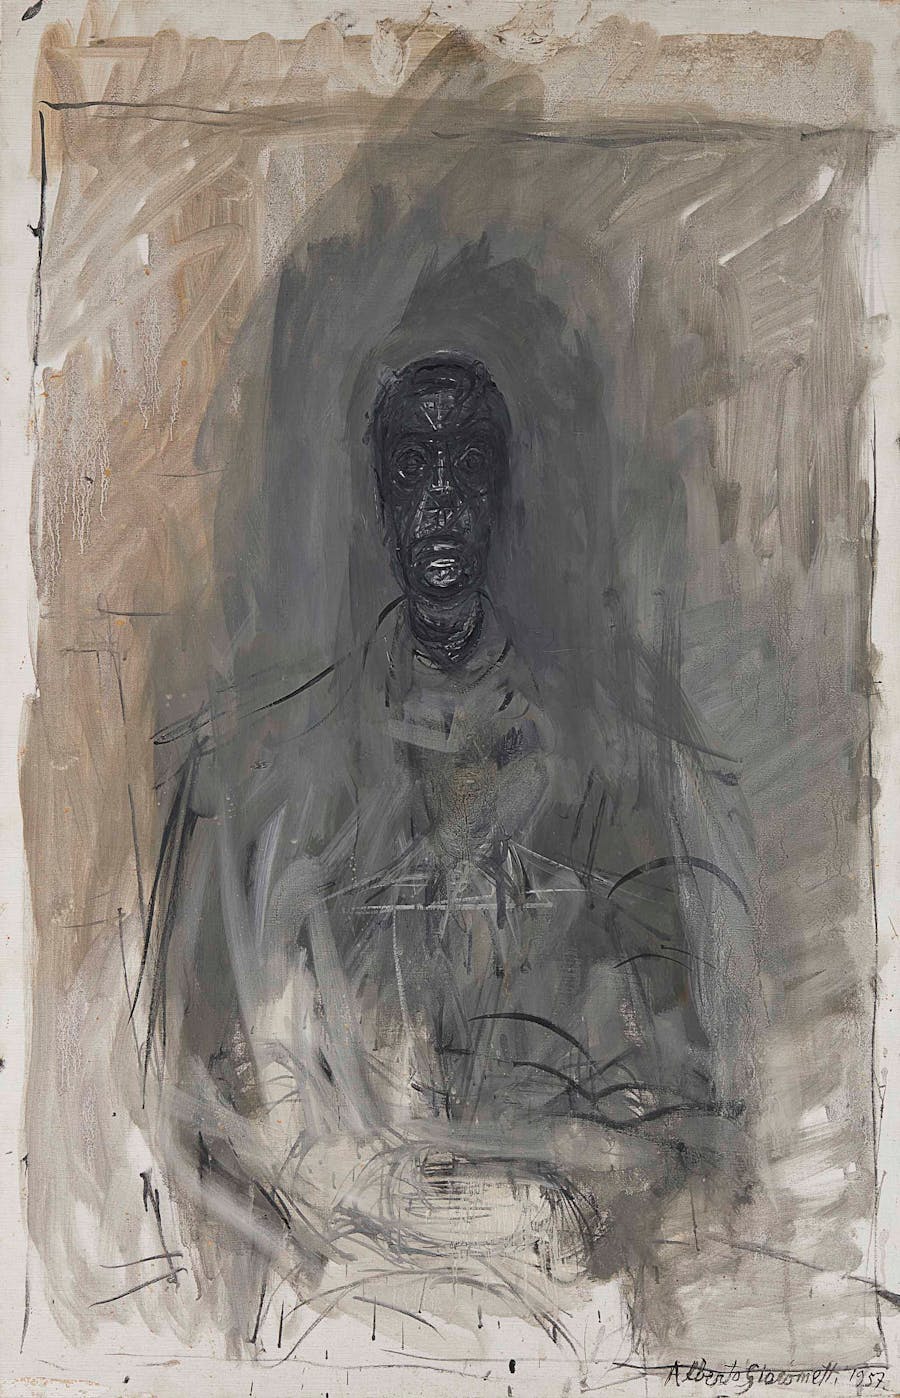 Alberto Giacometti (1901-1966), Tête noire (Portrait de Diego), 1957, oil on canvas, 100.2 x 65.2 cm. Image via Christie’s.